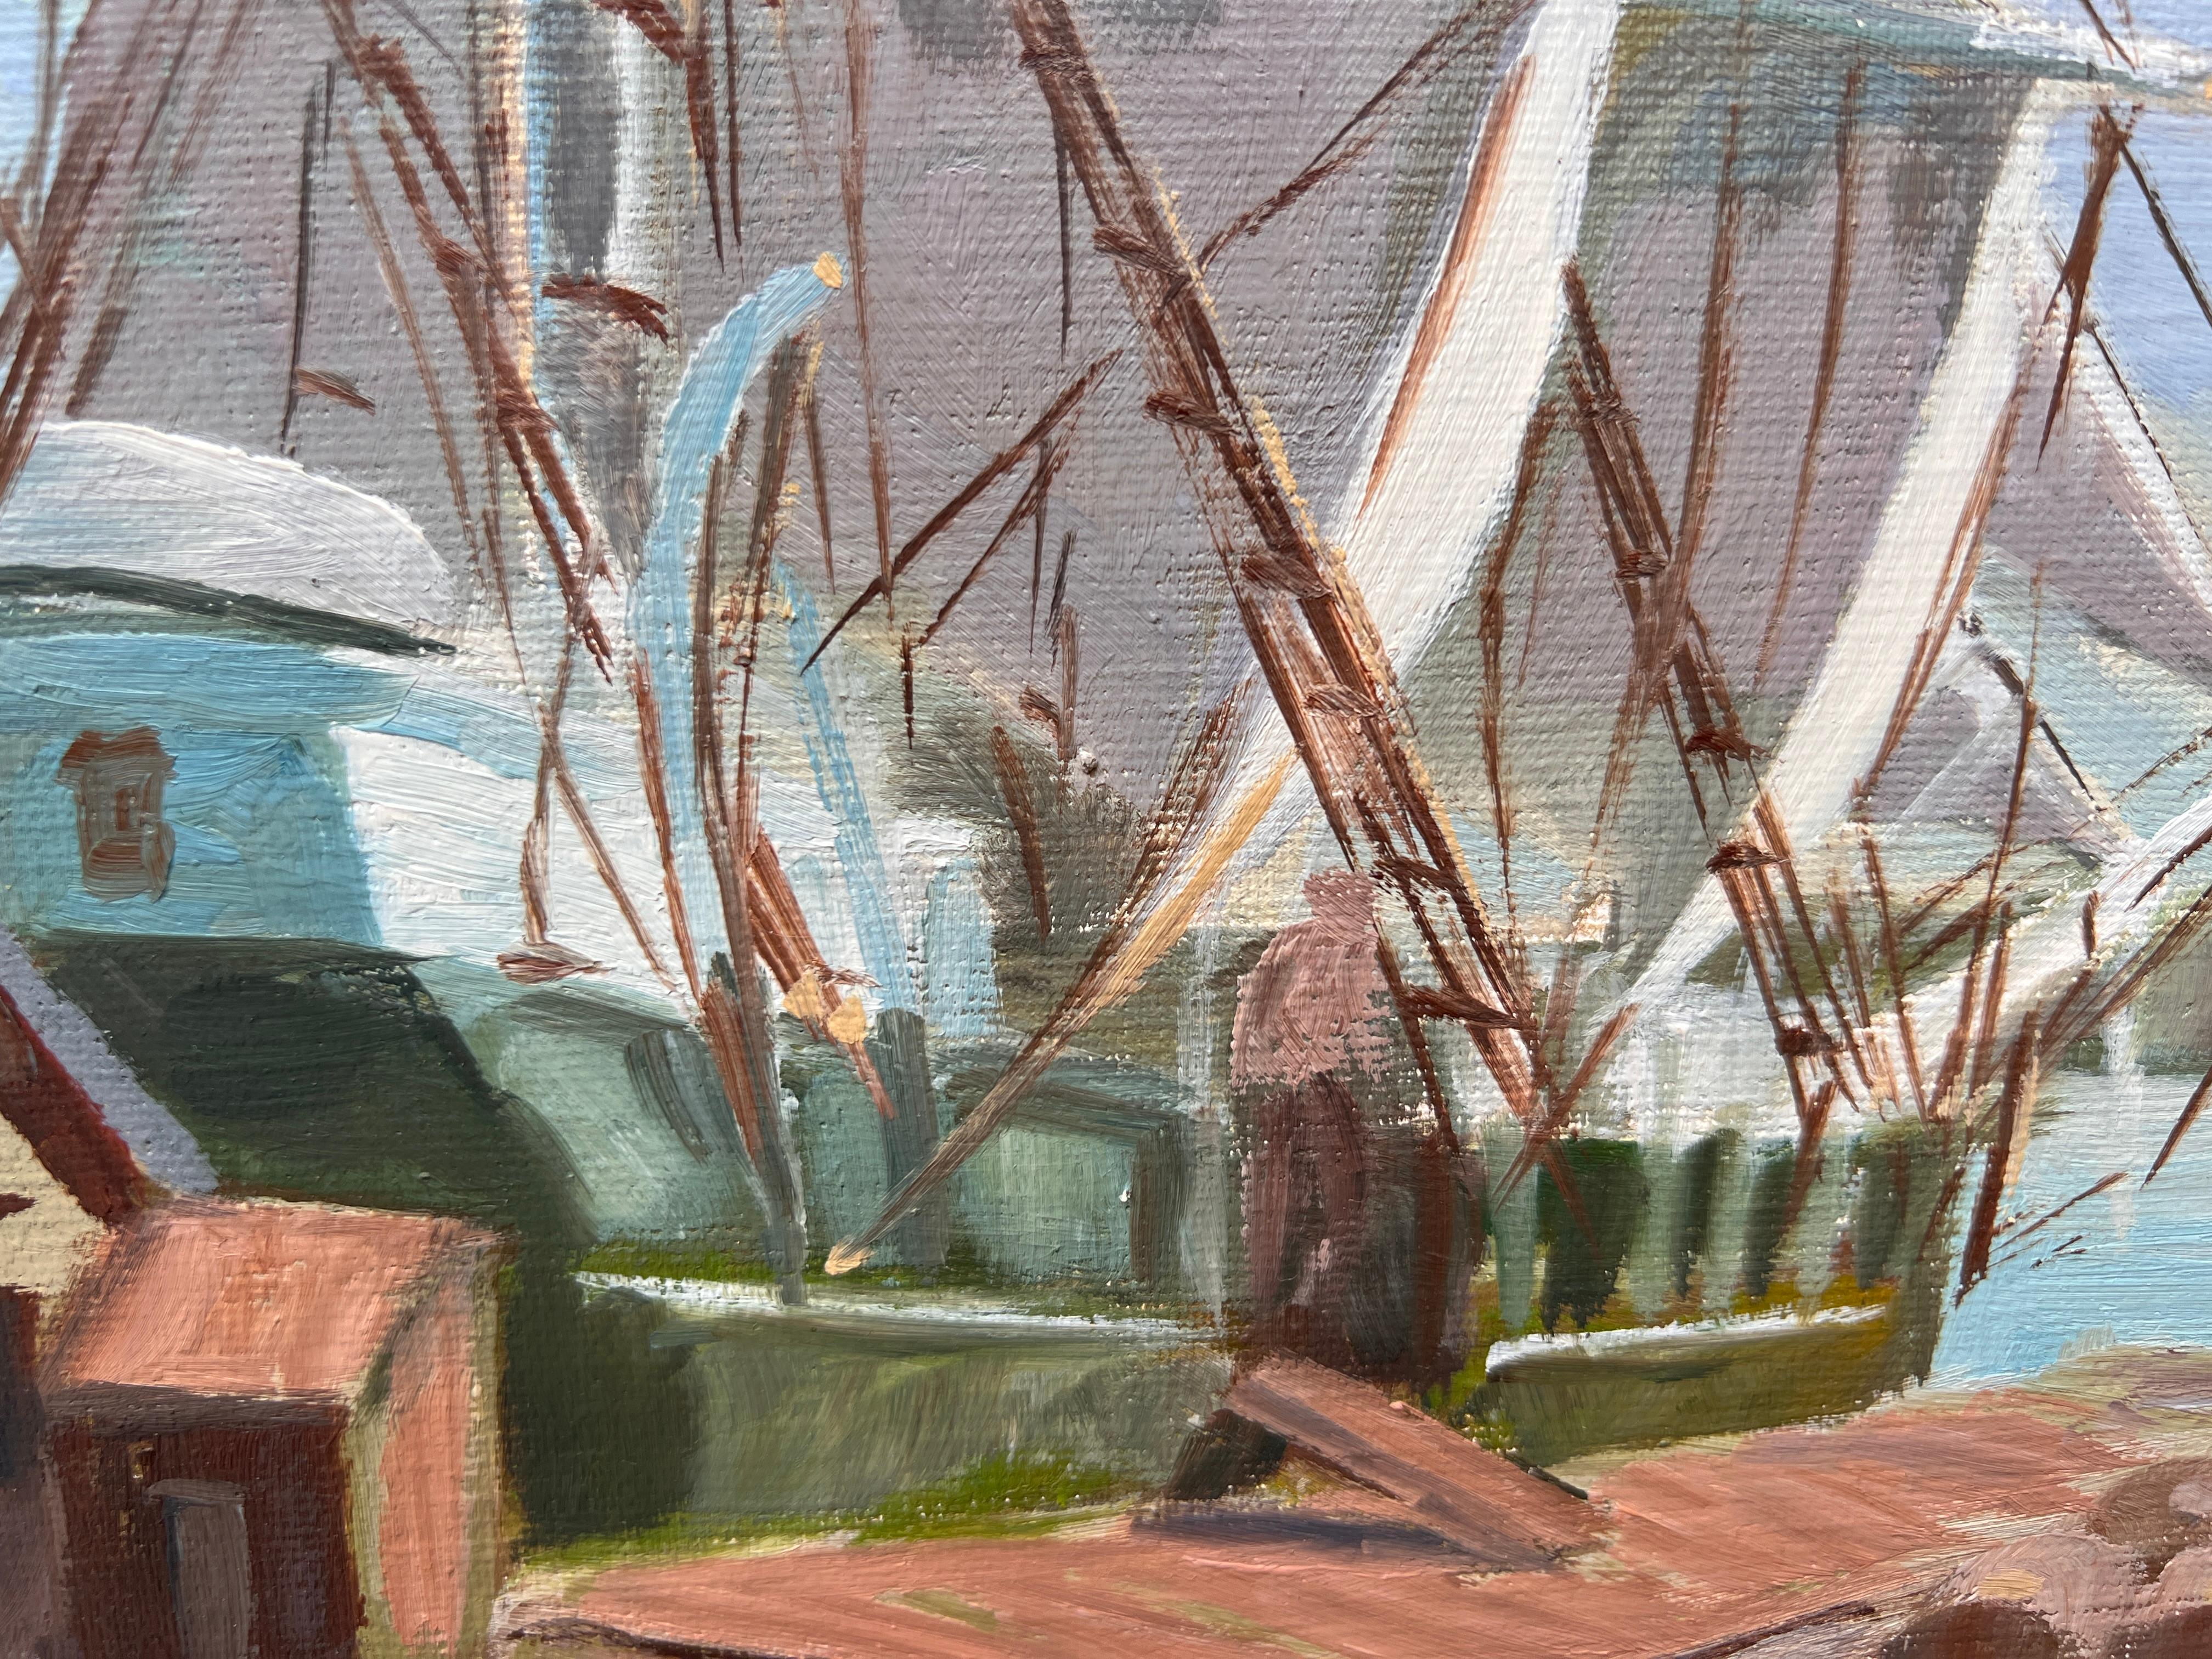 Humberto da Silva Fernandes(1937-2005) Clipper Ship Oil Painting on Canvas For Sale 7